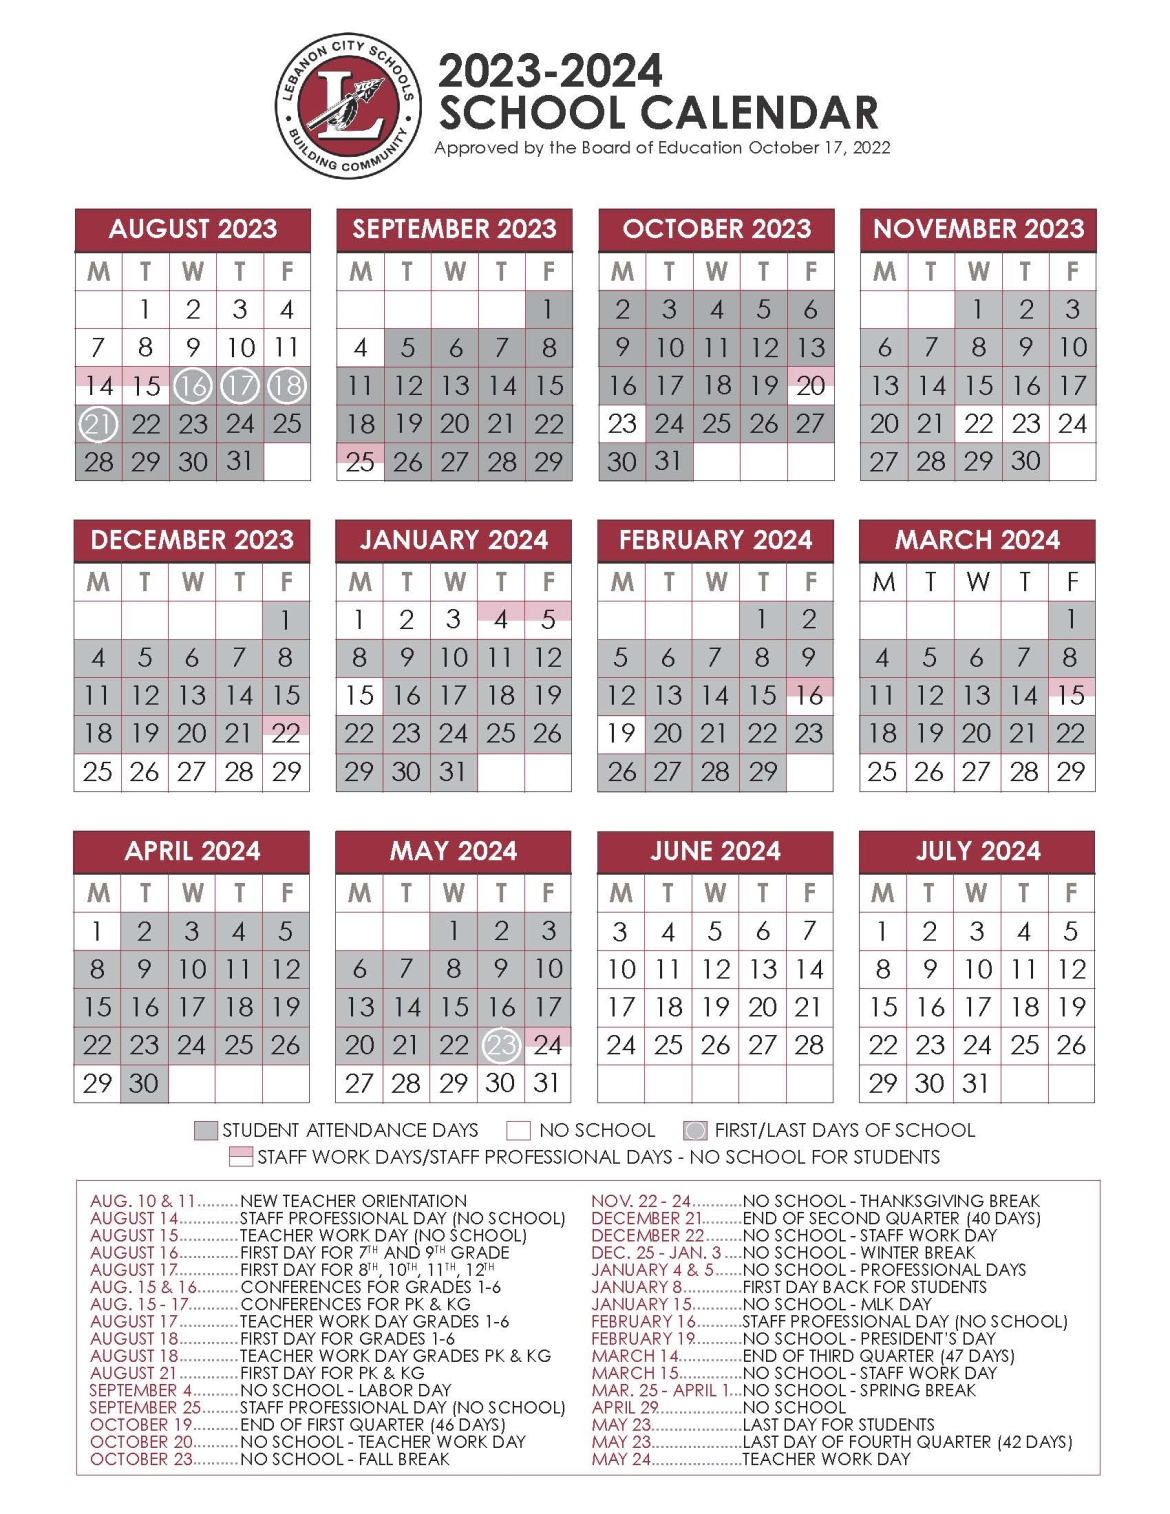 https://www.lebanonschools.org/media/calendars/Updated 23-24 Calendar.pdf